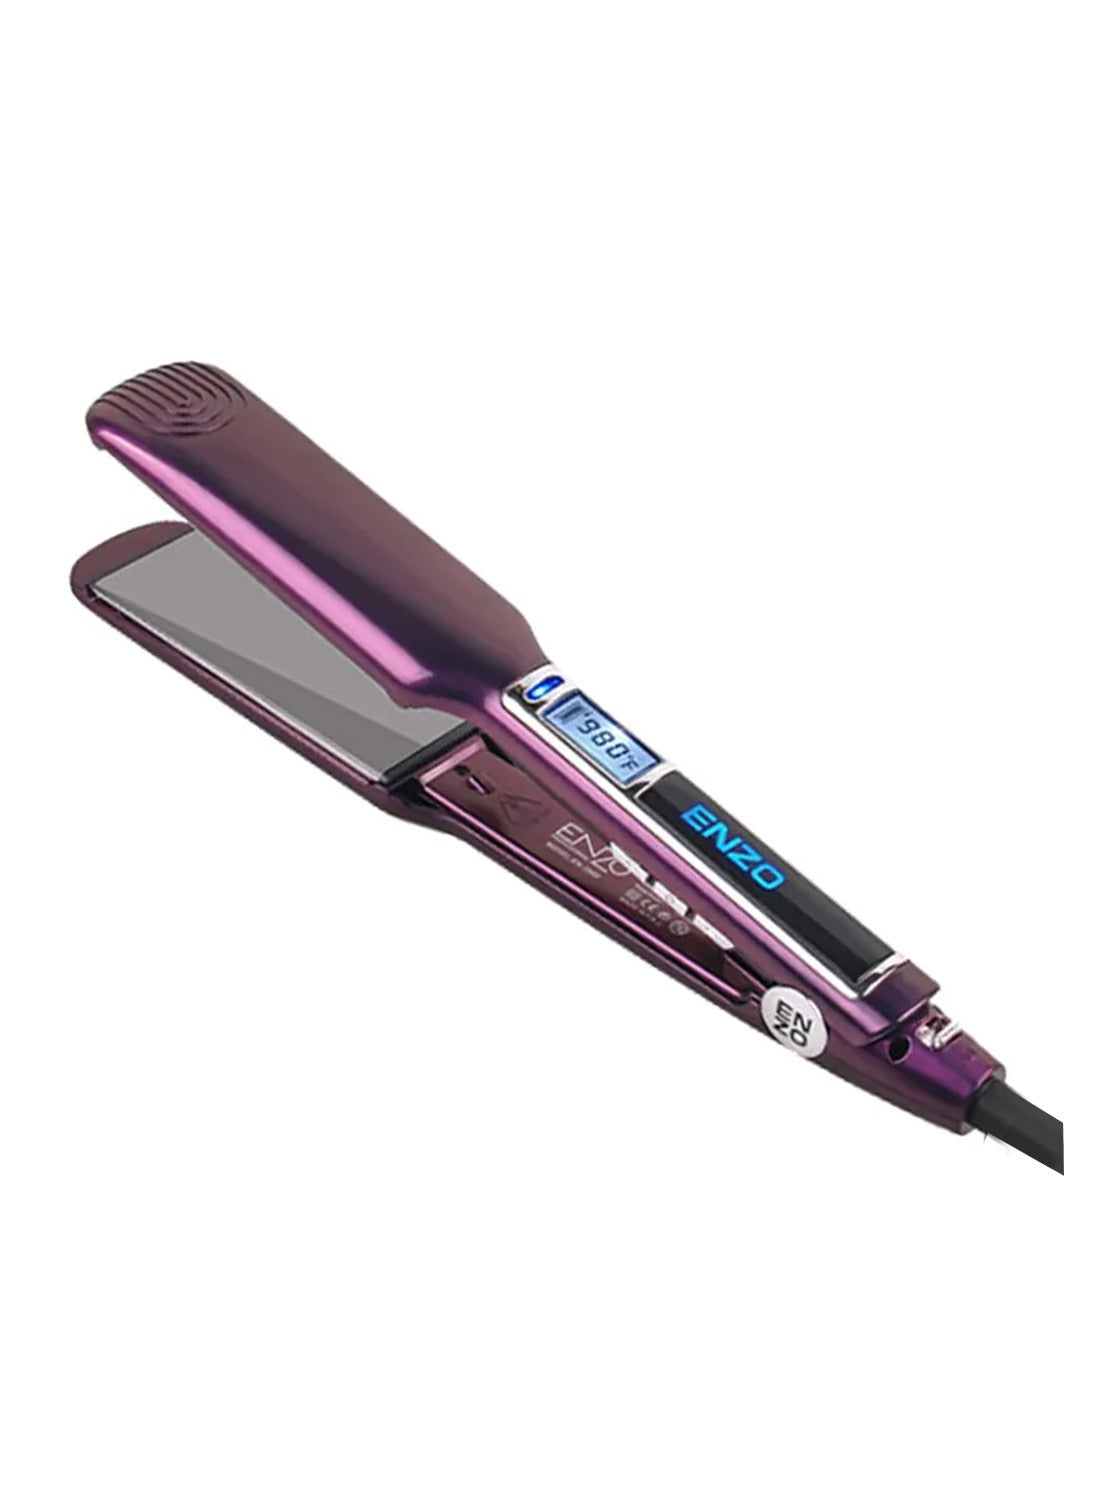 ENZO Professional hair straightener dedicated to applying keratin and protein EN-3969 Purple